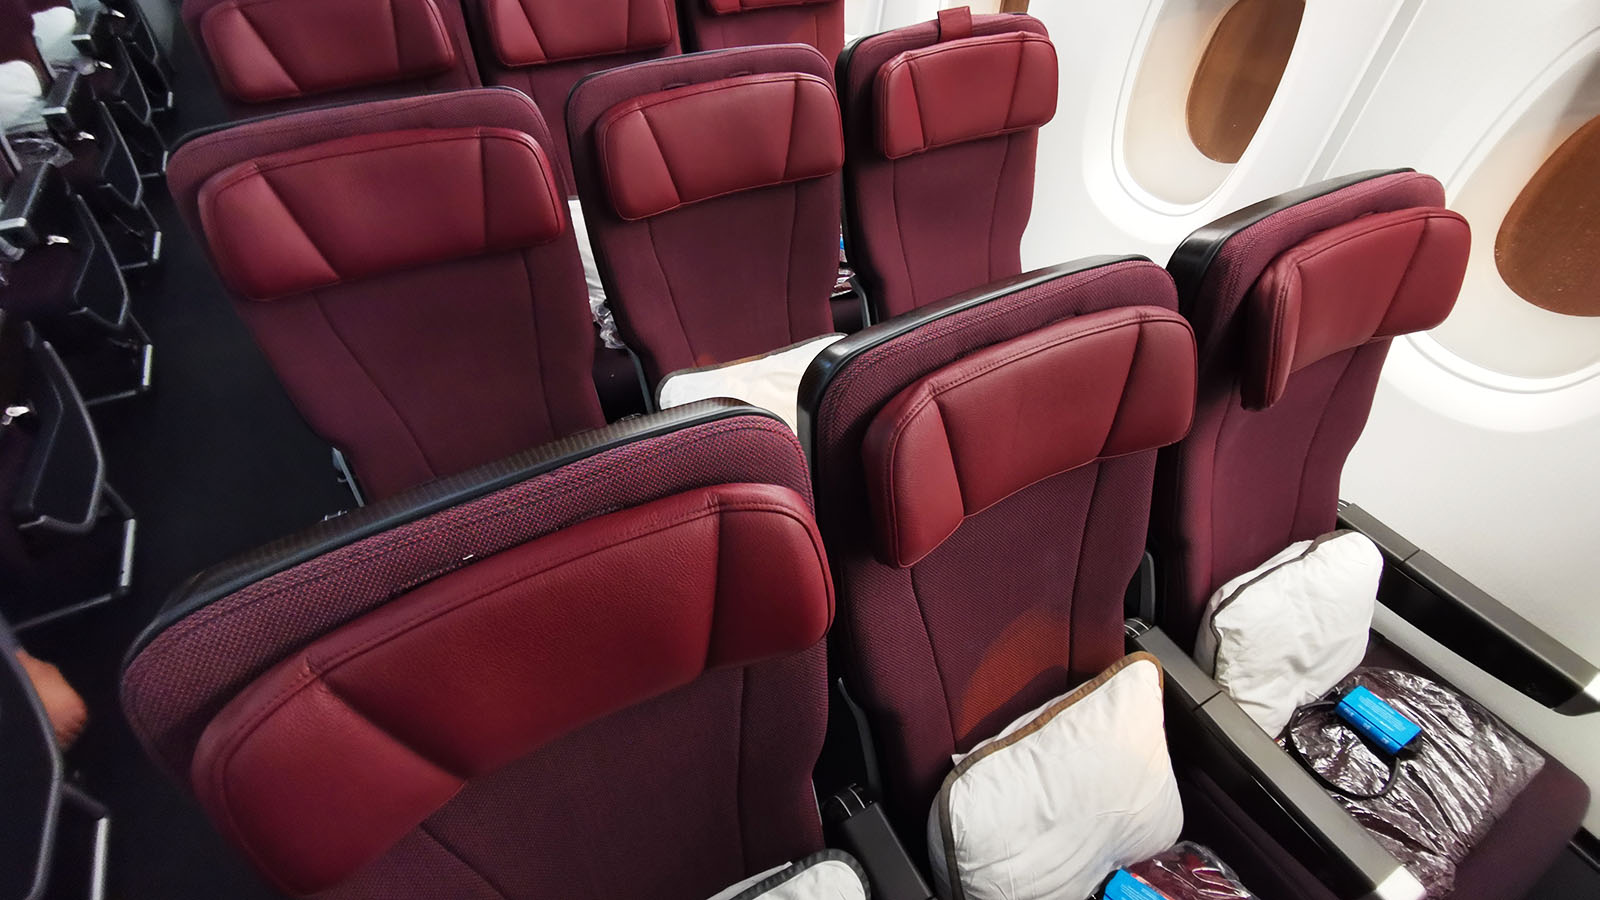 Seating in Qantas Airbus A380 Economy